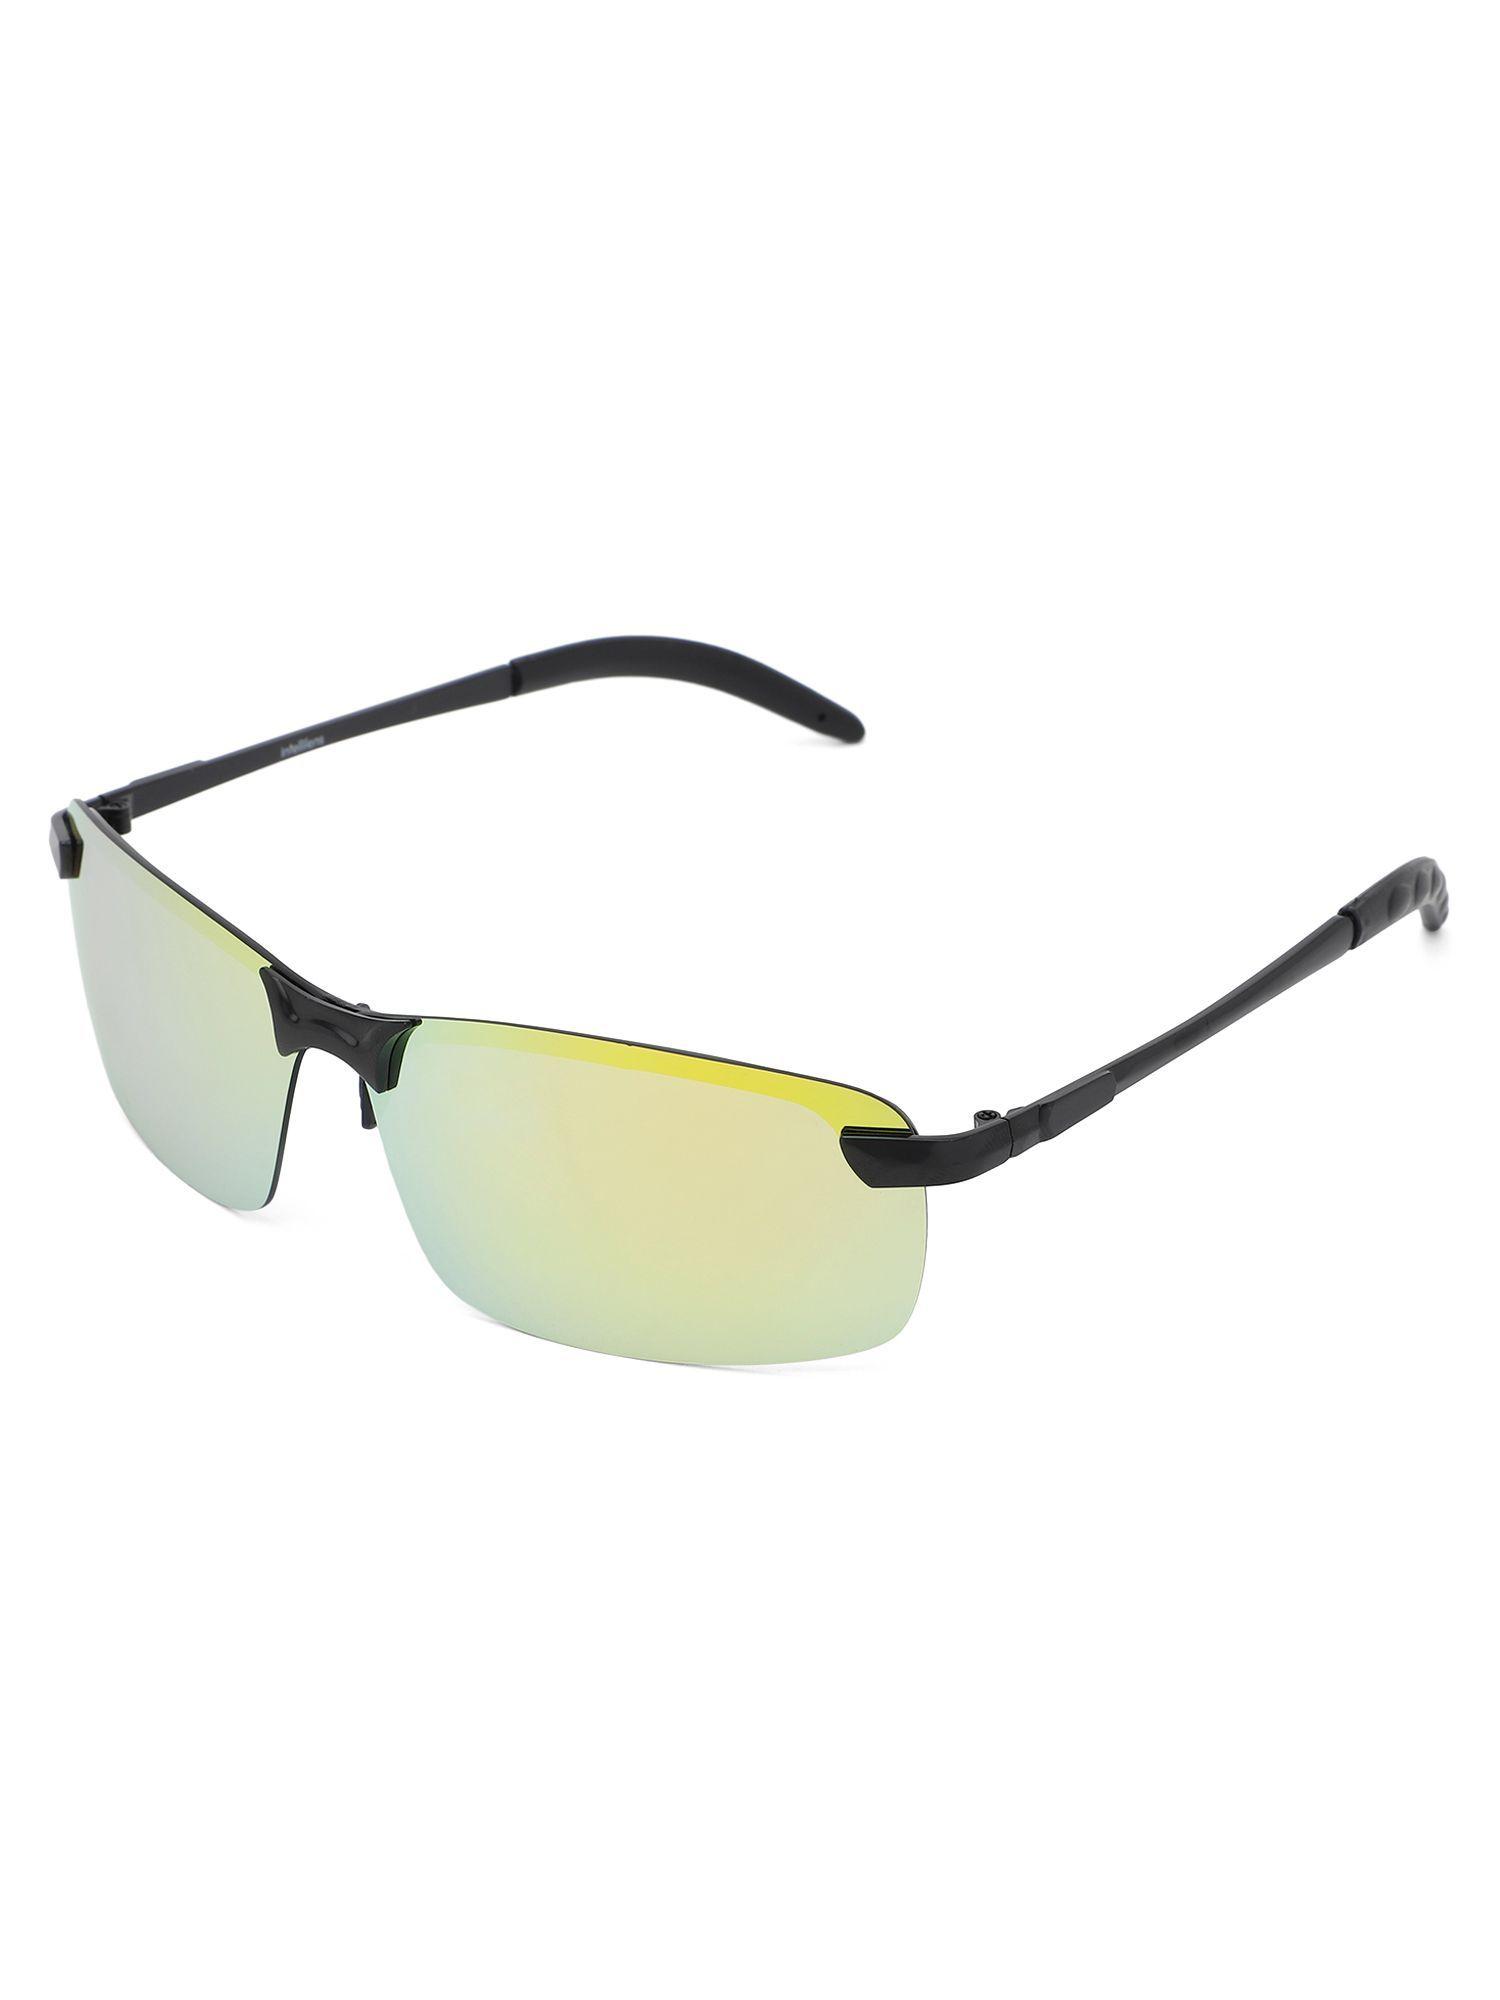 100% uv protect hd vision polarized night riding sunglasses